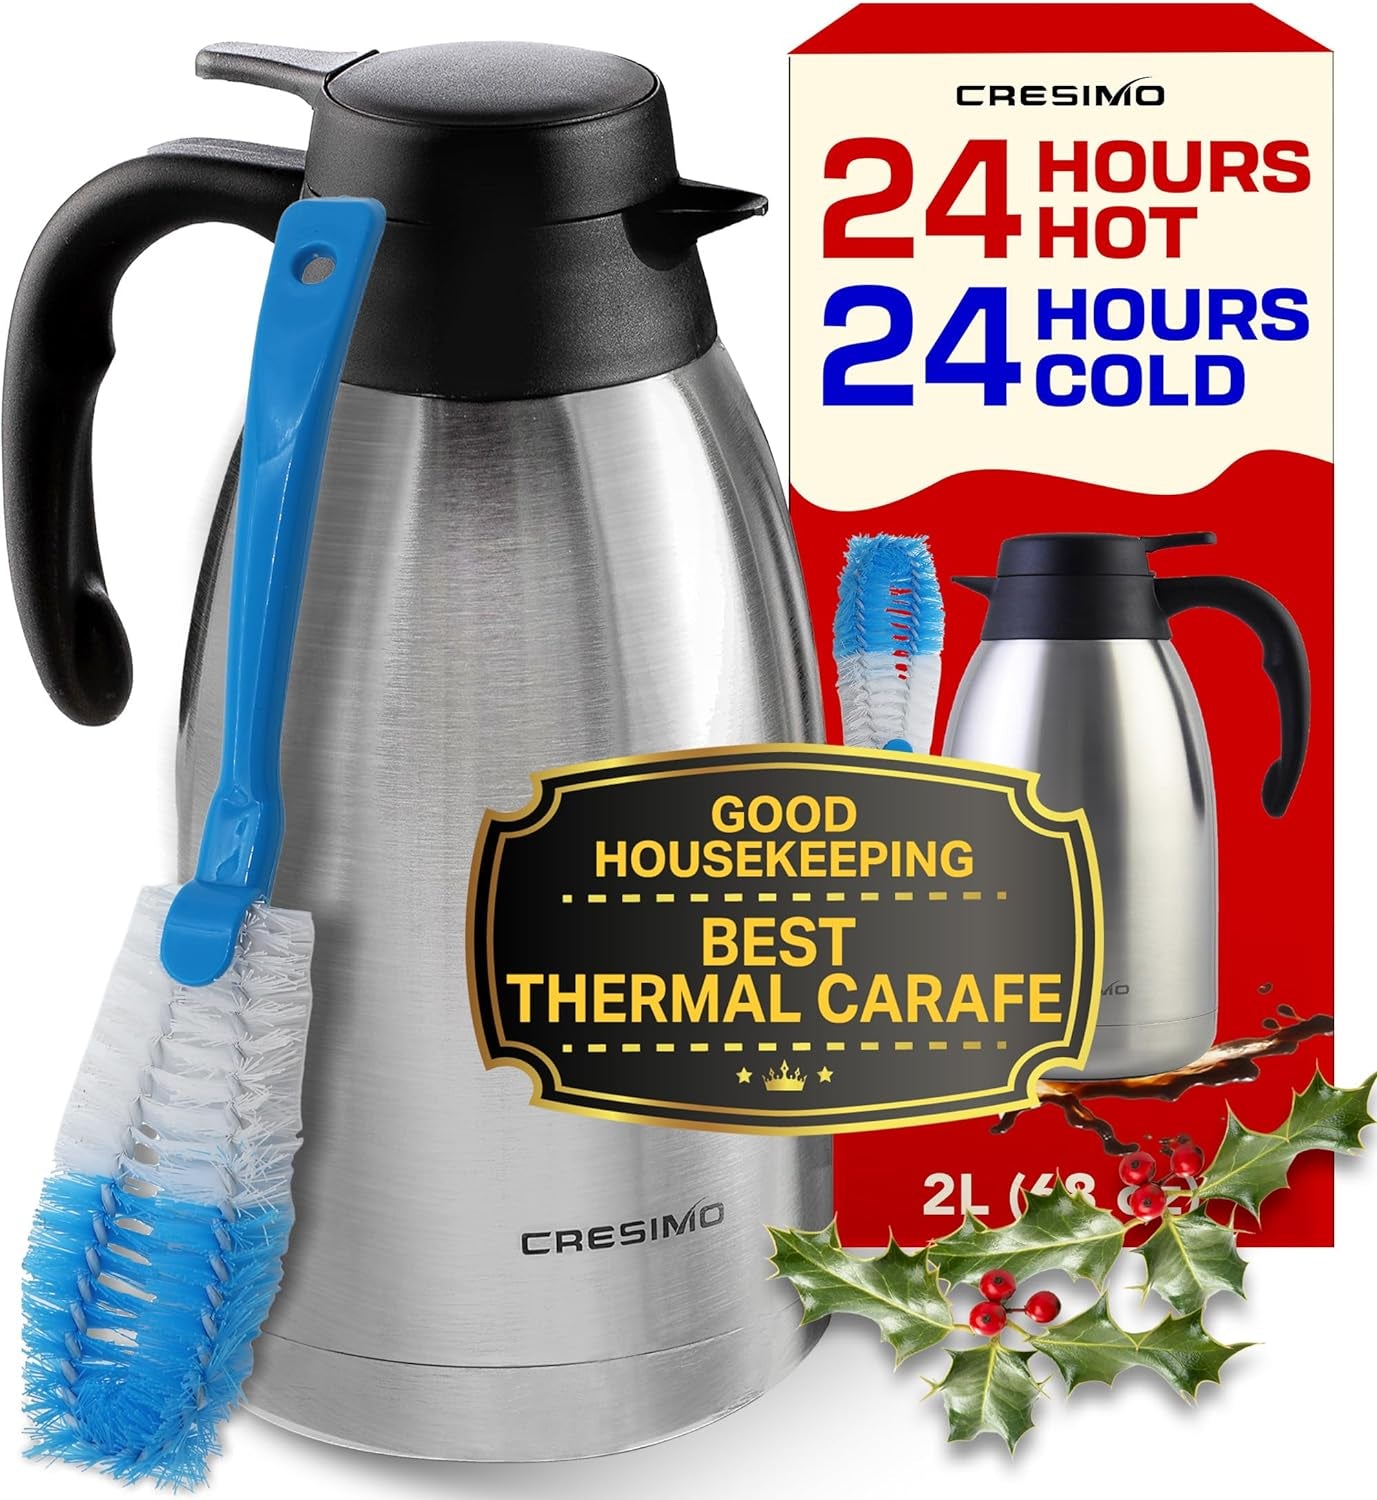 Thermal Coffee Carafe 68 Oz - 12 Hours Hot Beverage Dispenser